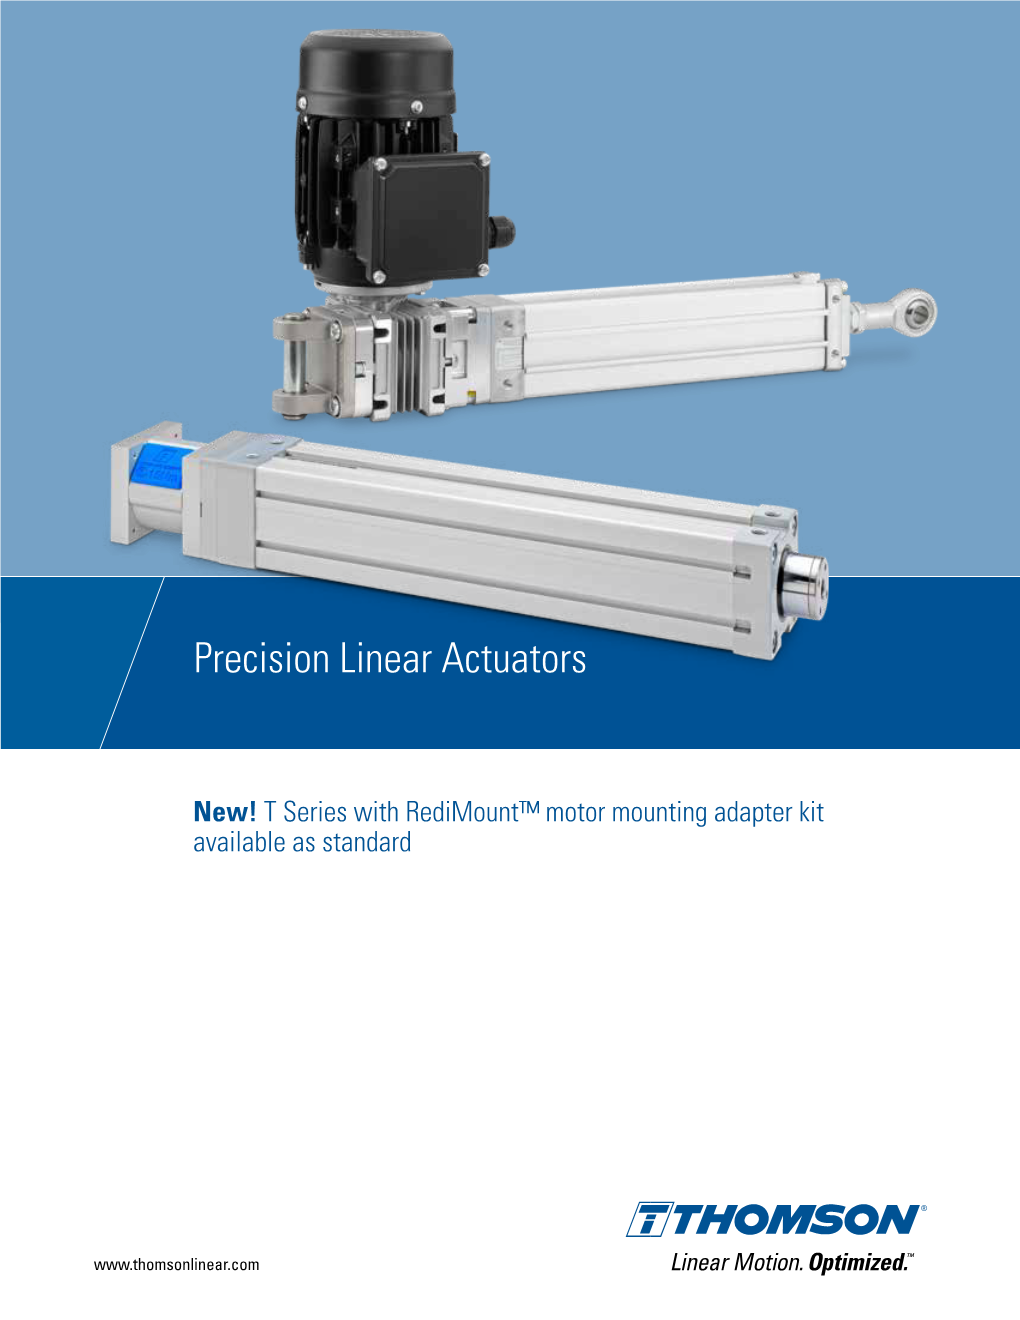 Thomson Precision Linear Actuators